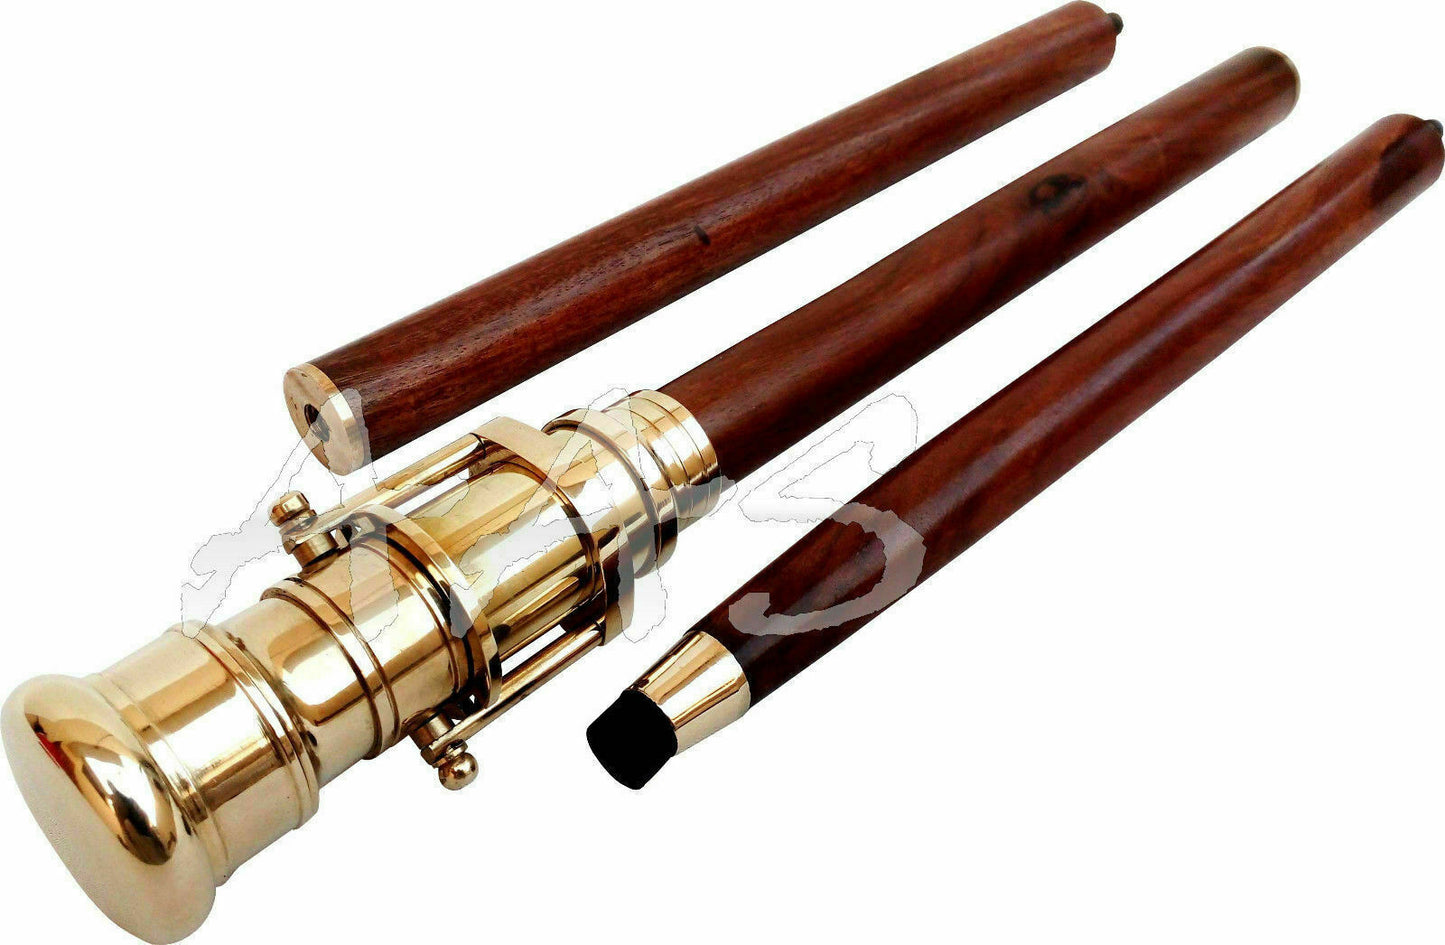 Vintage Nautical Wooden Walking Stick Cane with Brass Hidden Telescope Handle